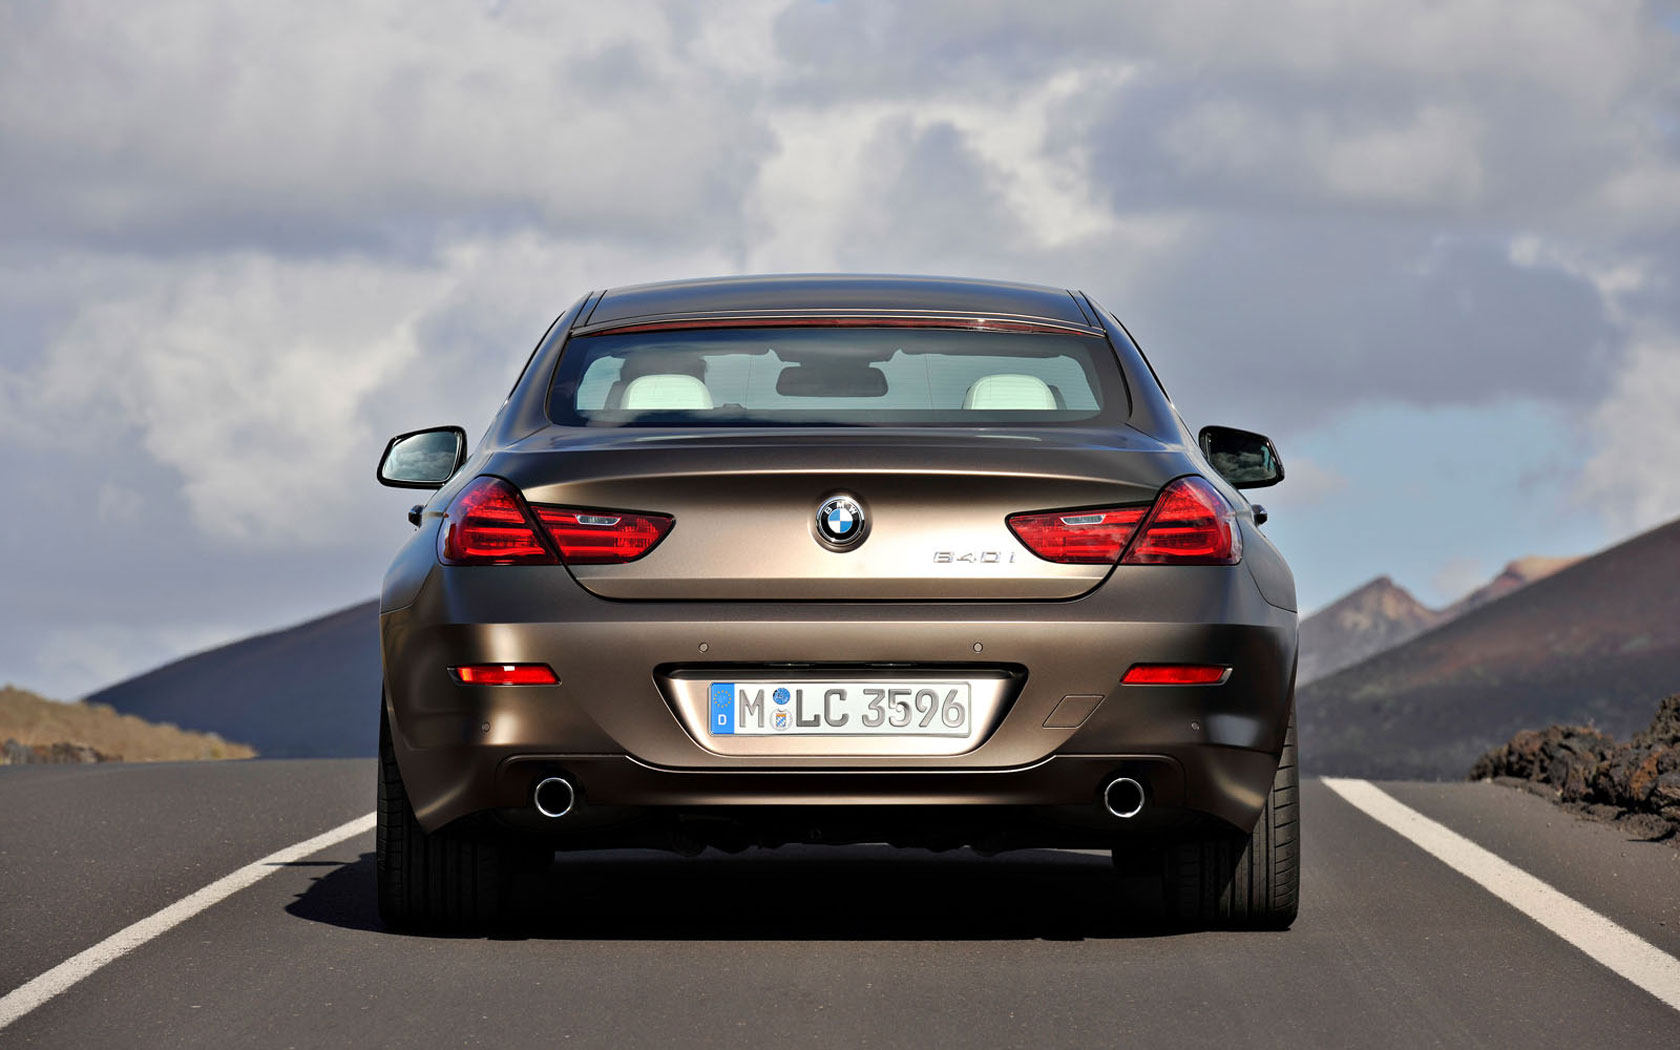  BMW 6-series Gran Coupe (2012-2015)